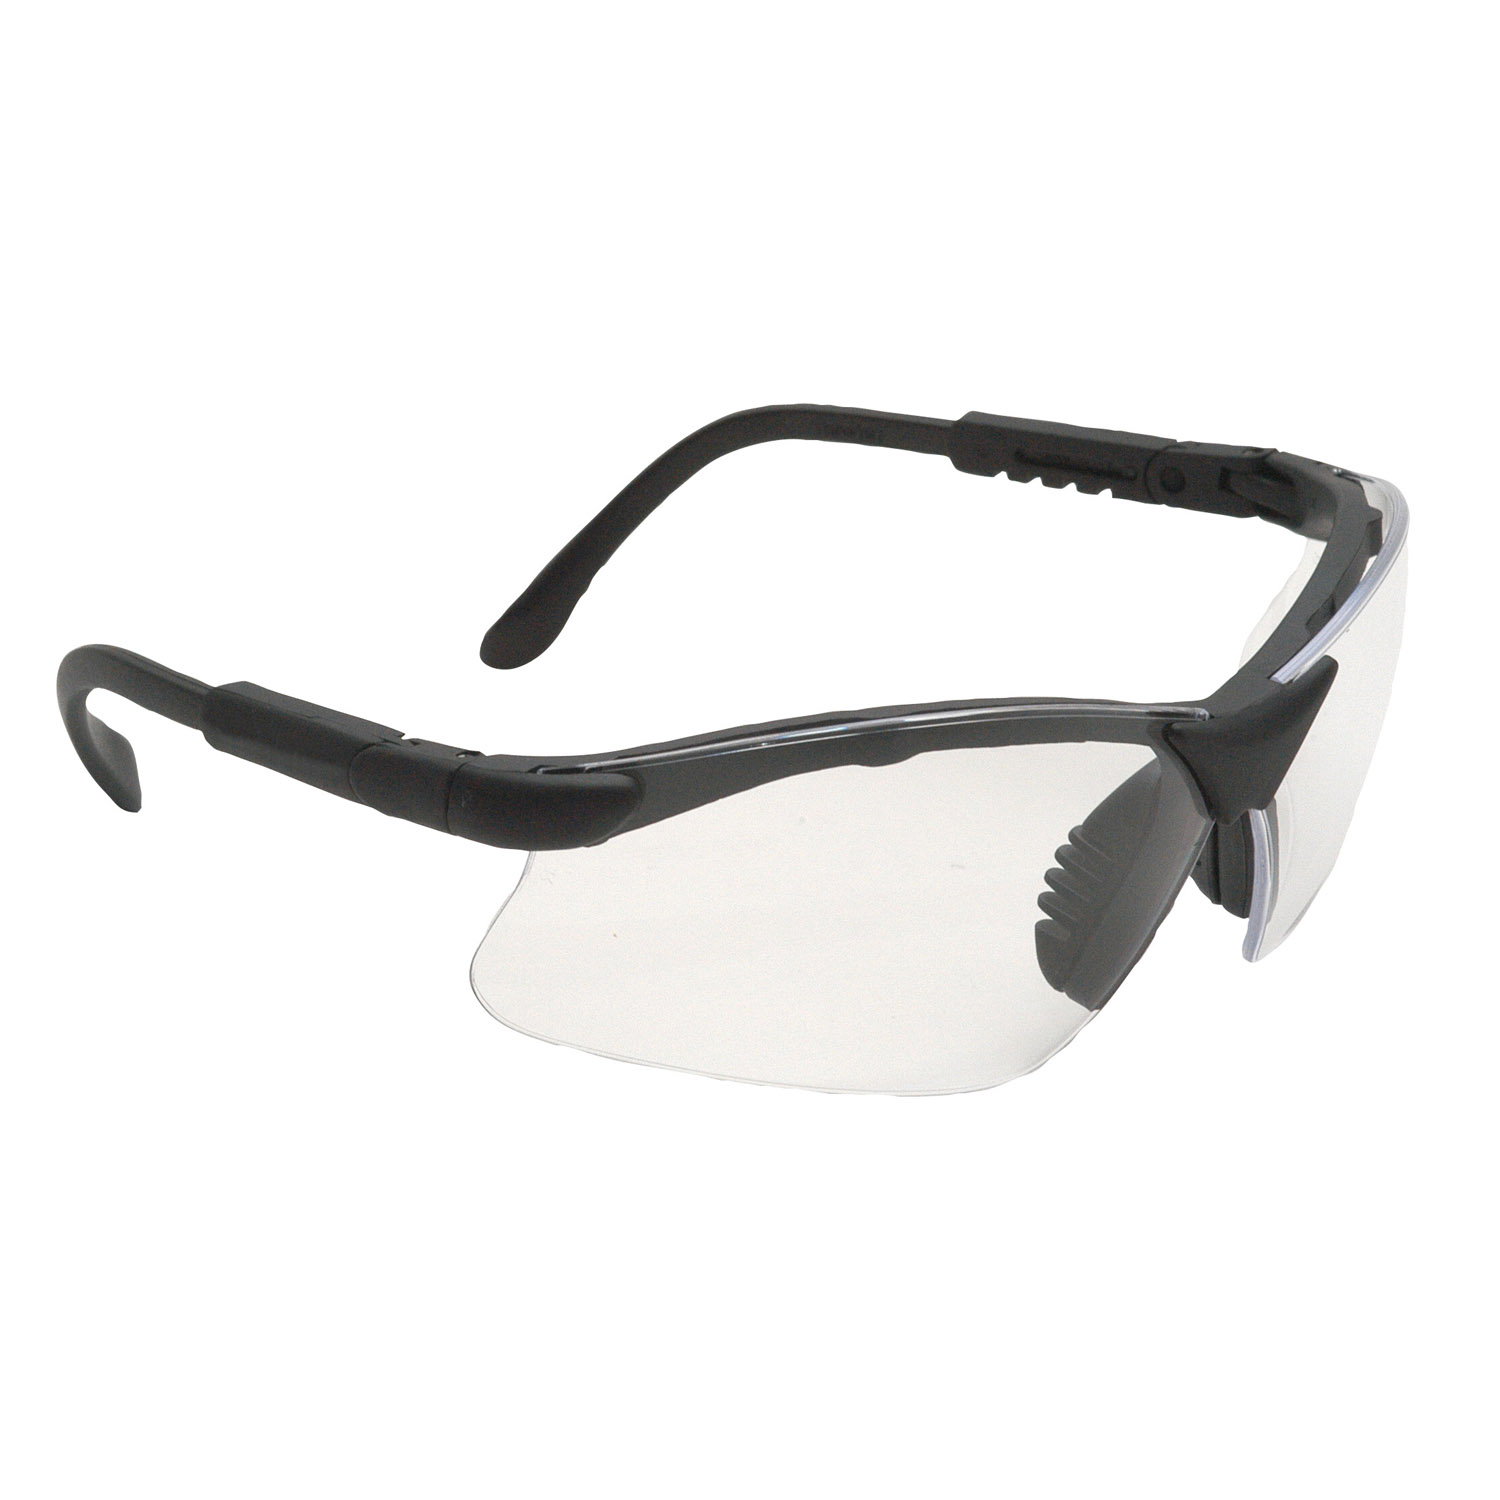 Revelation™ Safety Eyewear - Black Frame - Clear Anti-Fog Lens